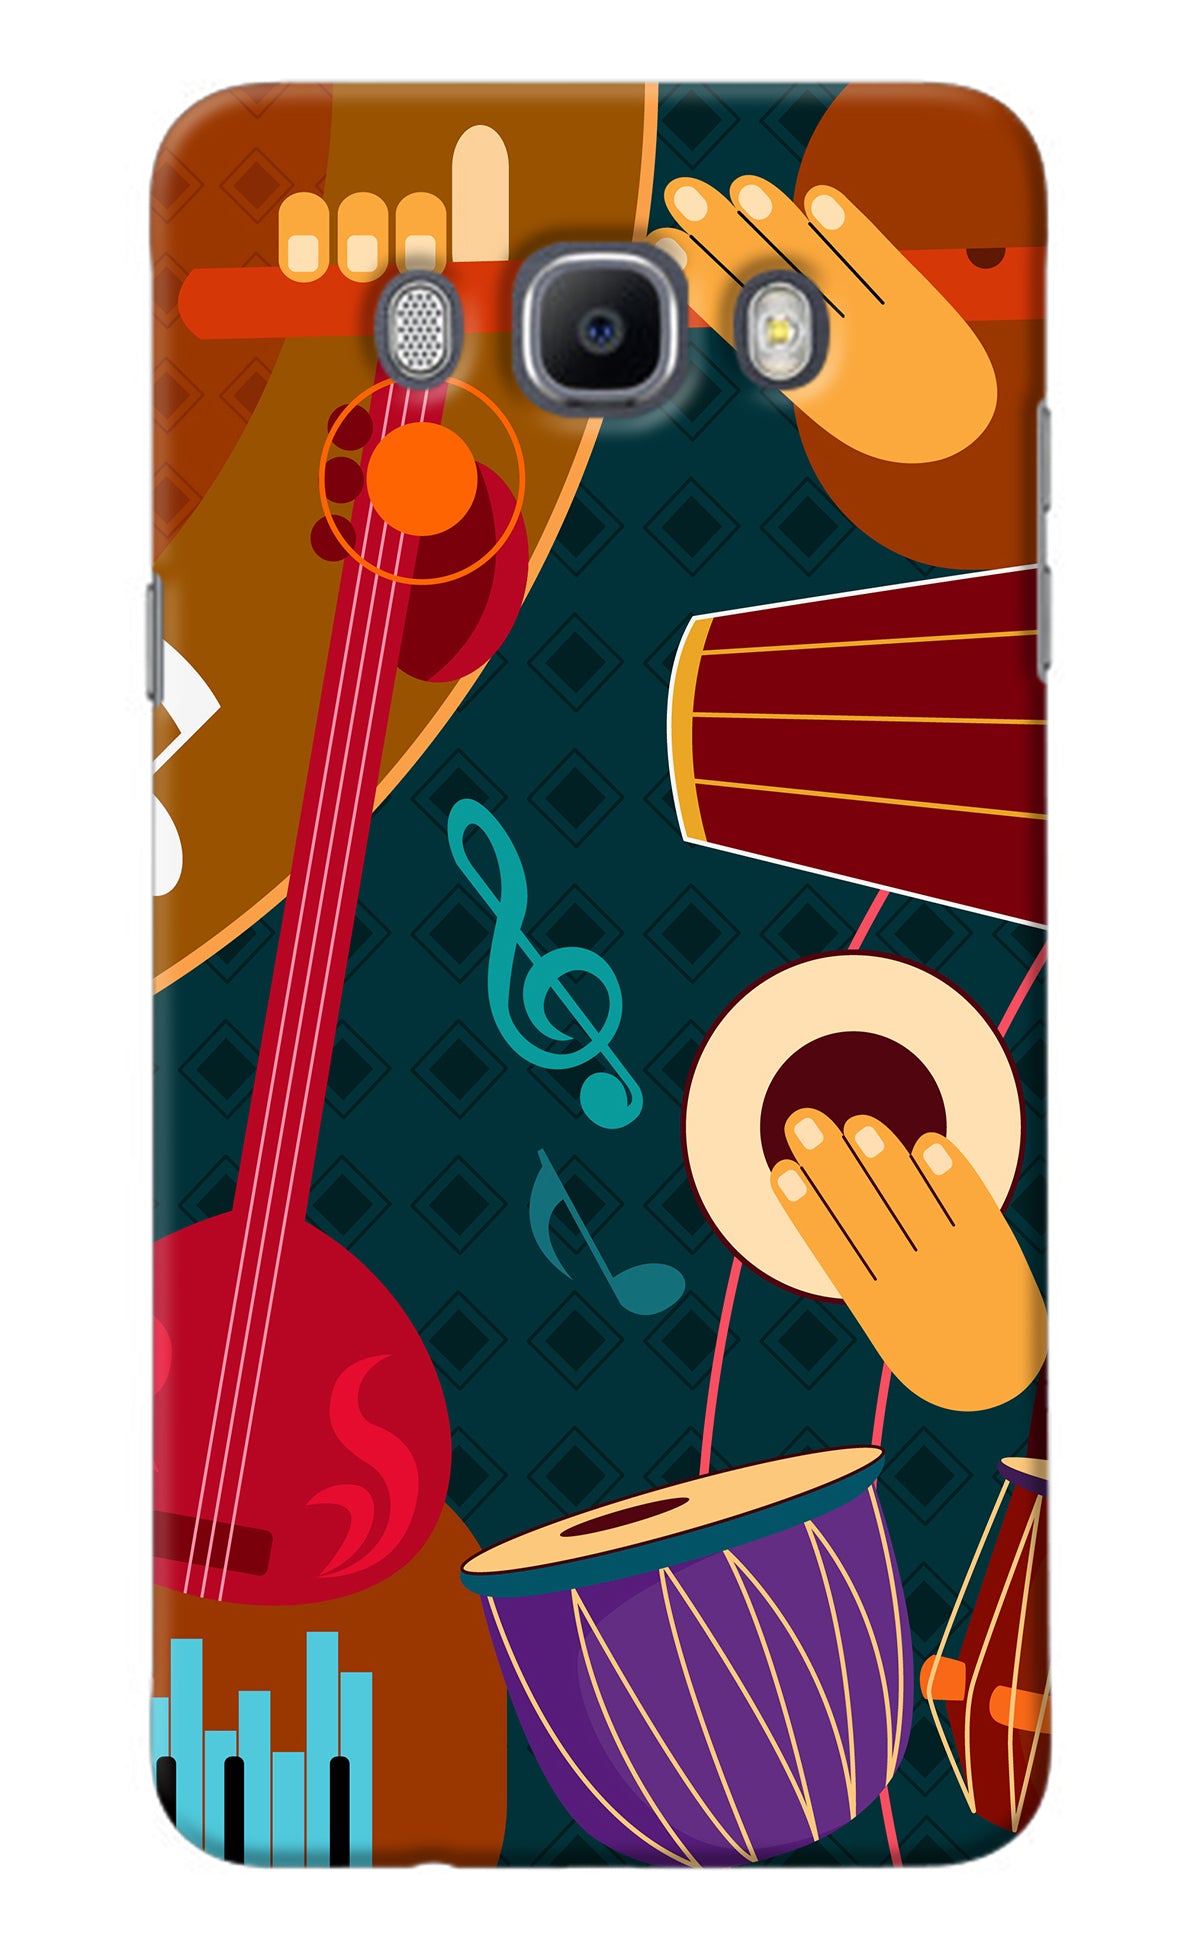 Music Instrument Samsung J7 2016 Back Cover